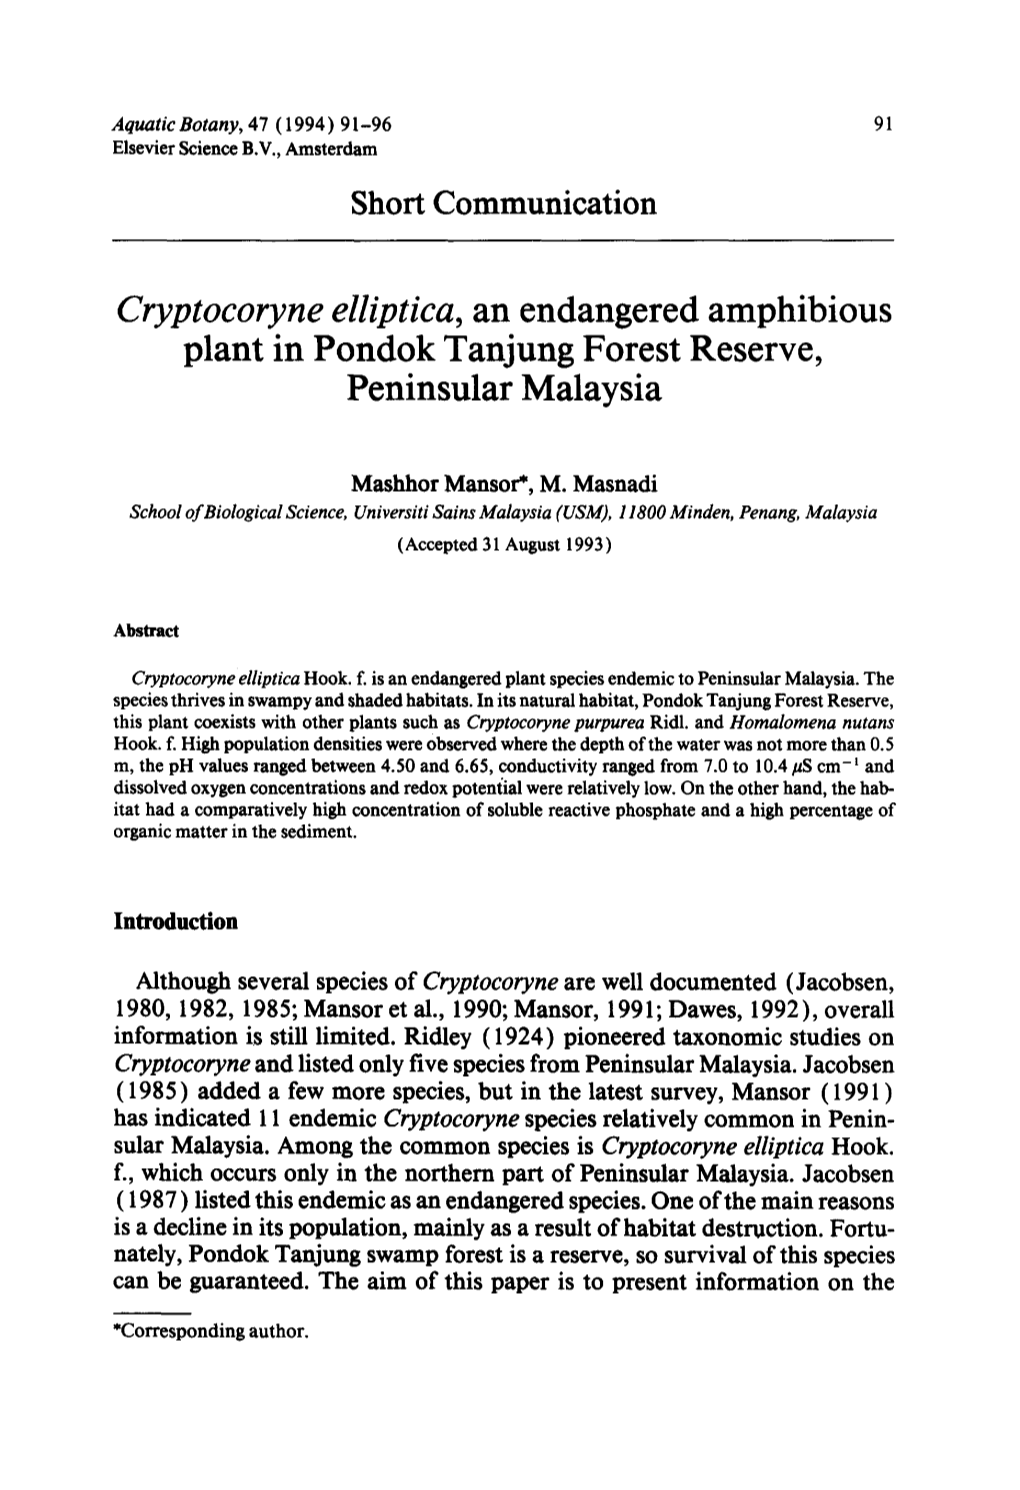 Cryptocoryne Elliptica, an Endangered Amphibious Plant in Pondok Tanjung Forest Reserve, Peninsular Malaysia